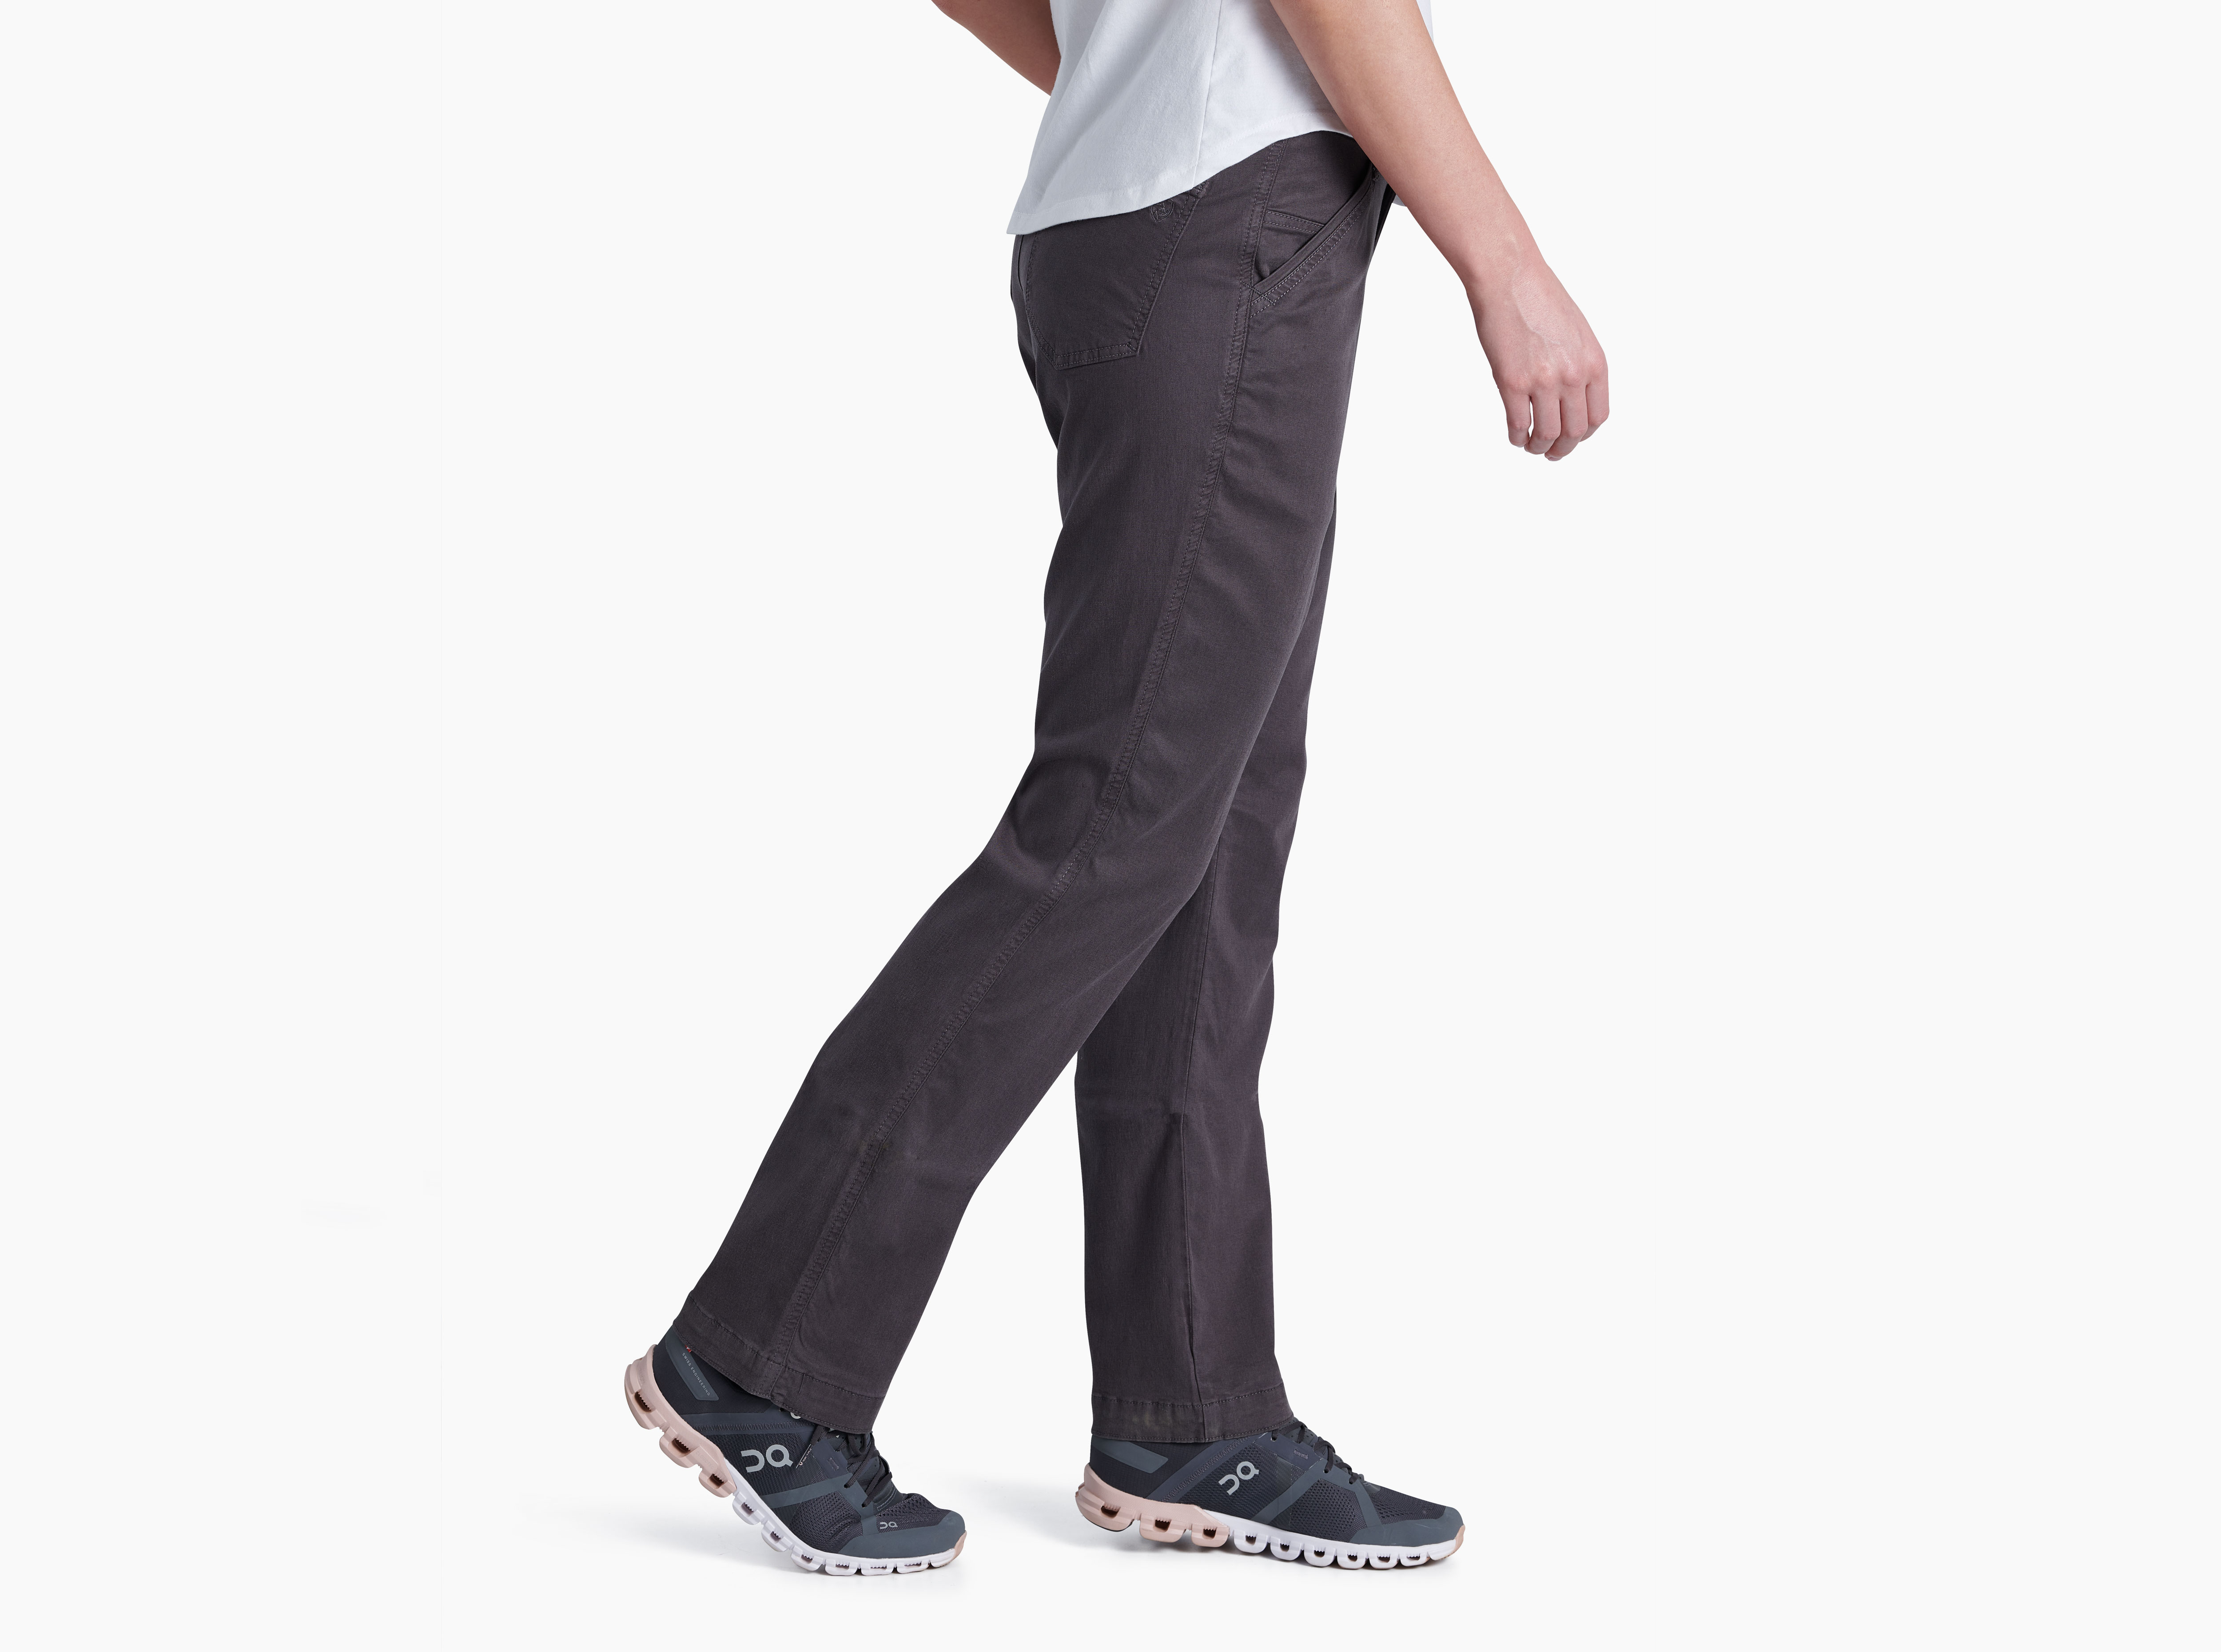 Kuhl Strattus Pants Style 6234 Women's Size 0 Black Hiking Travel Casual